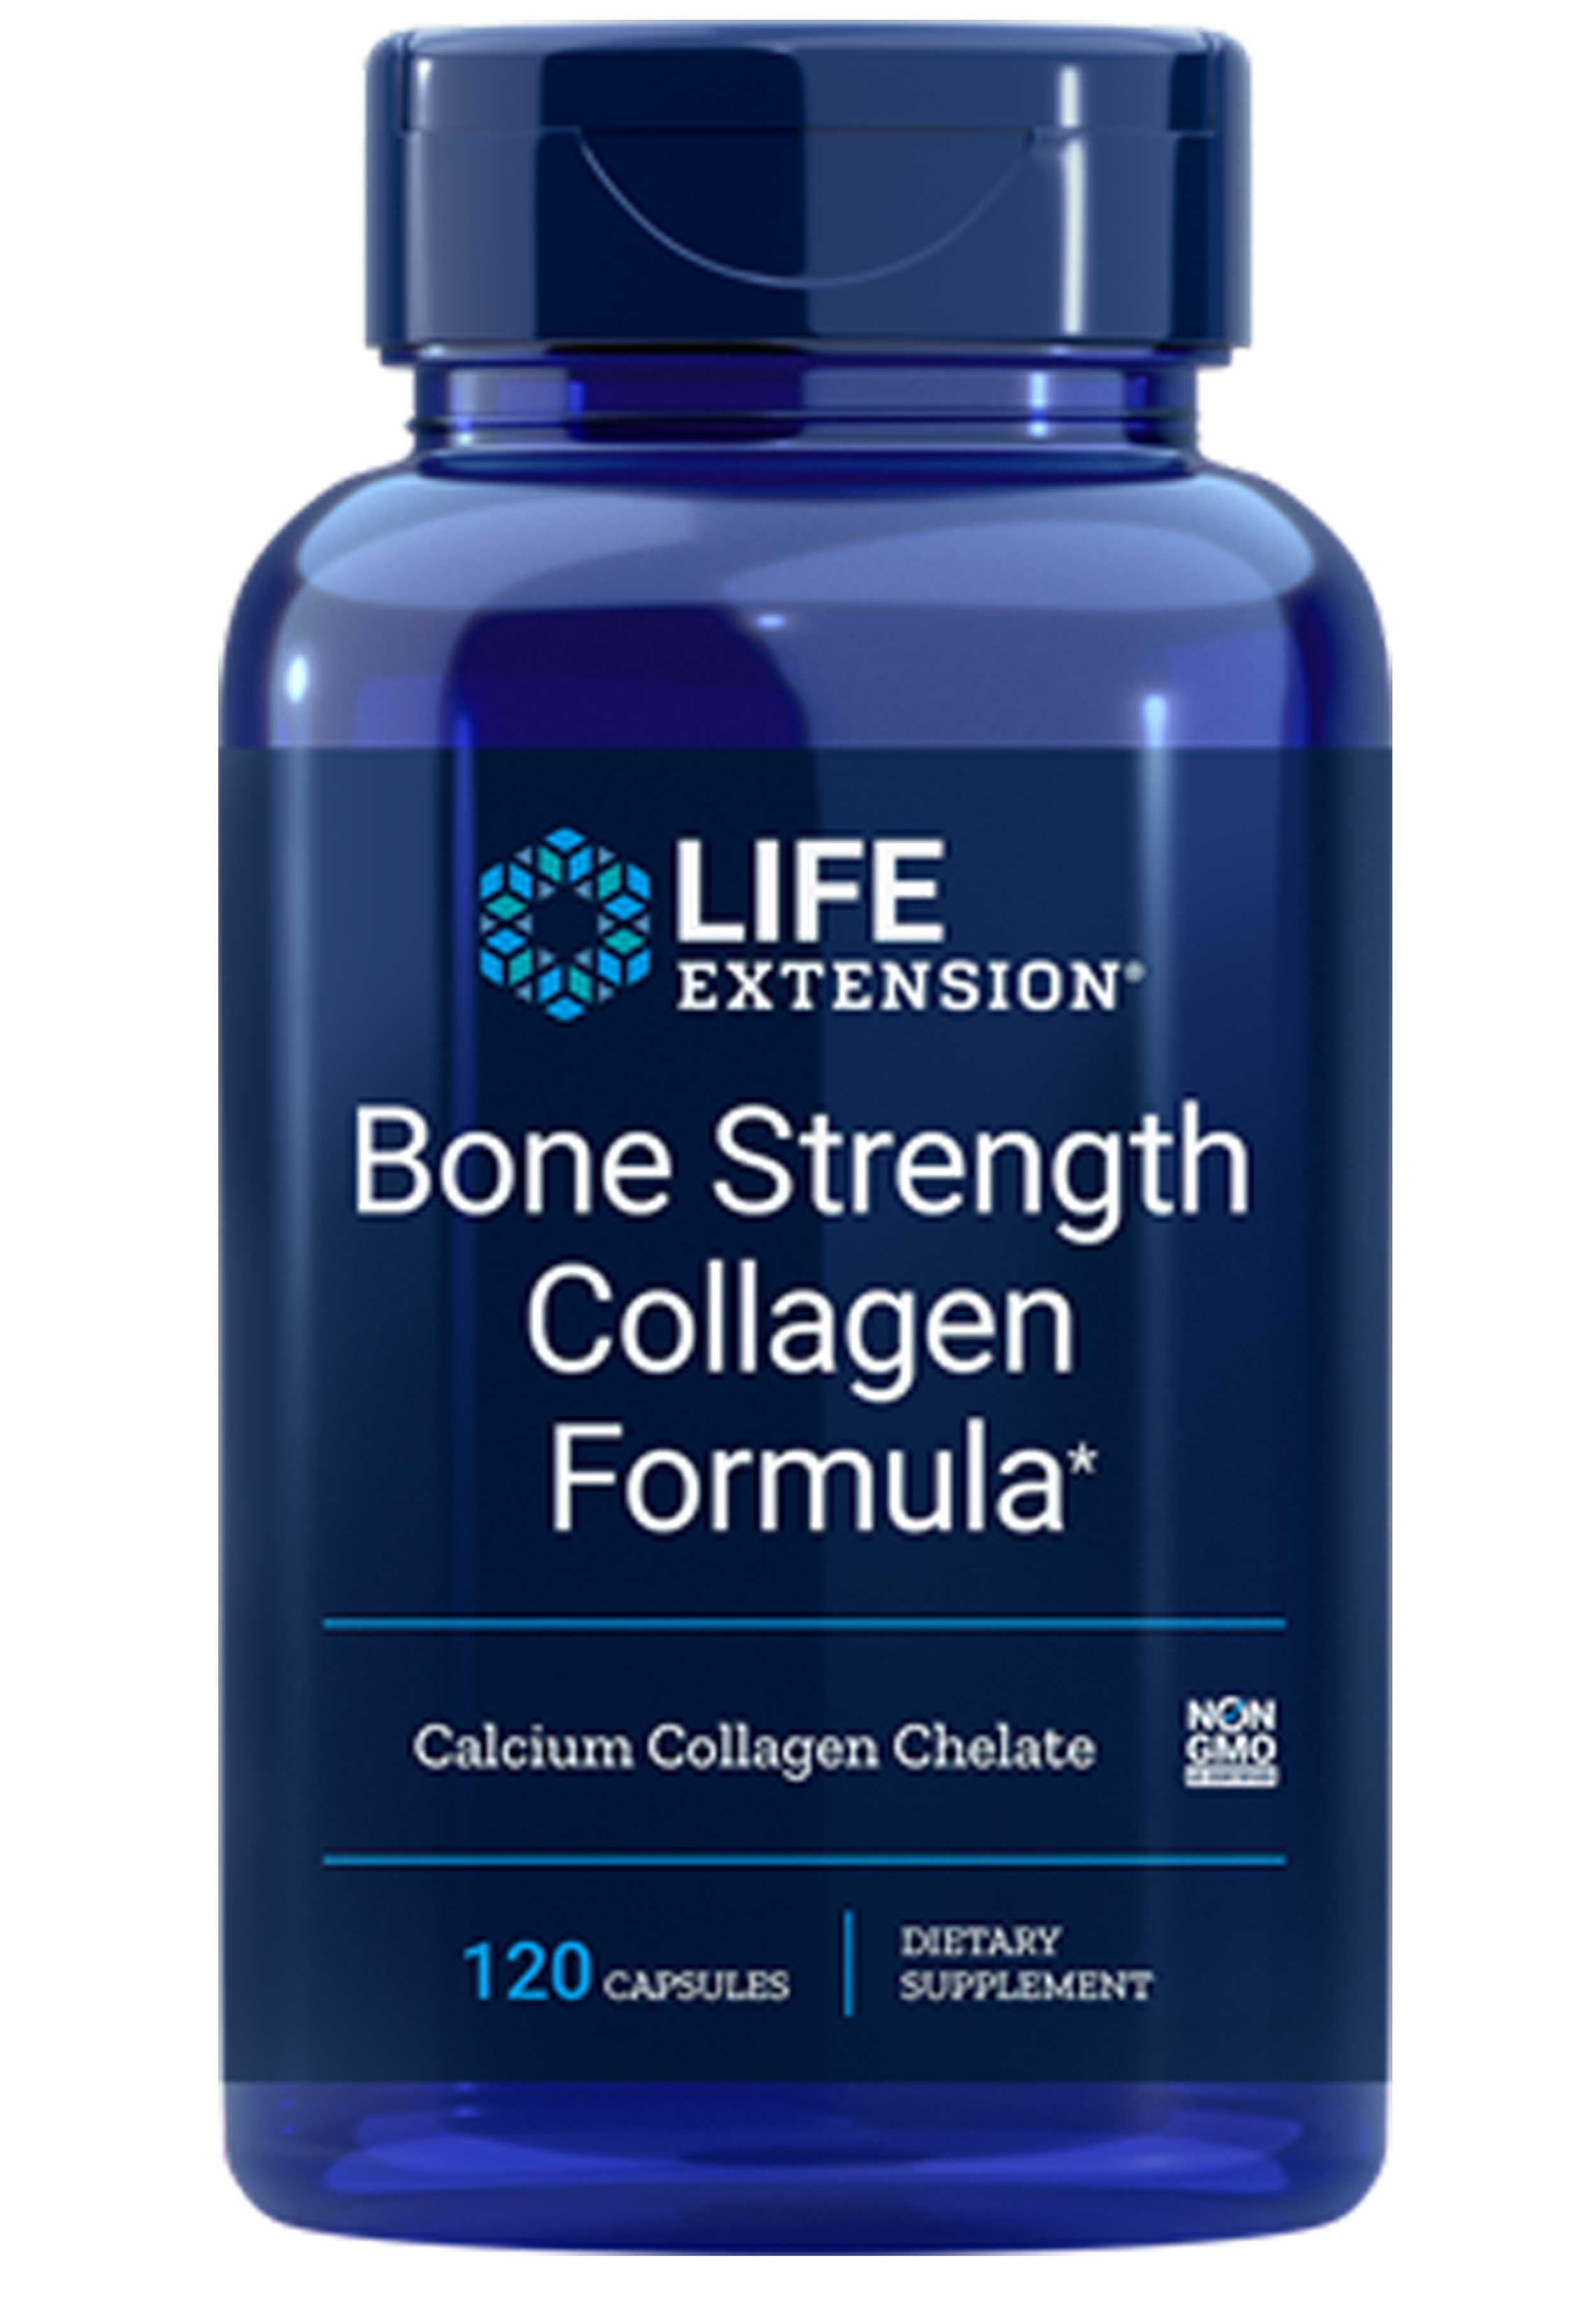 Life Extension Bone Strength Formula with KoAct